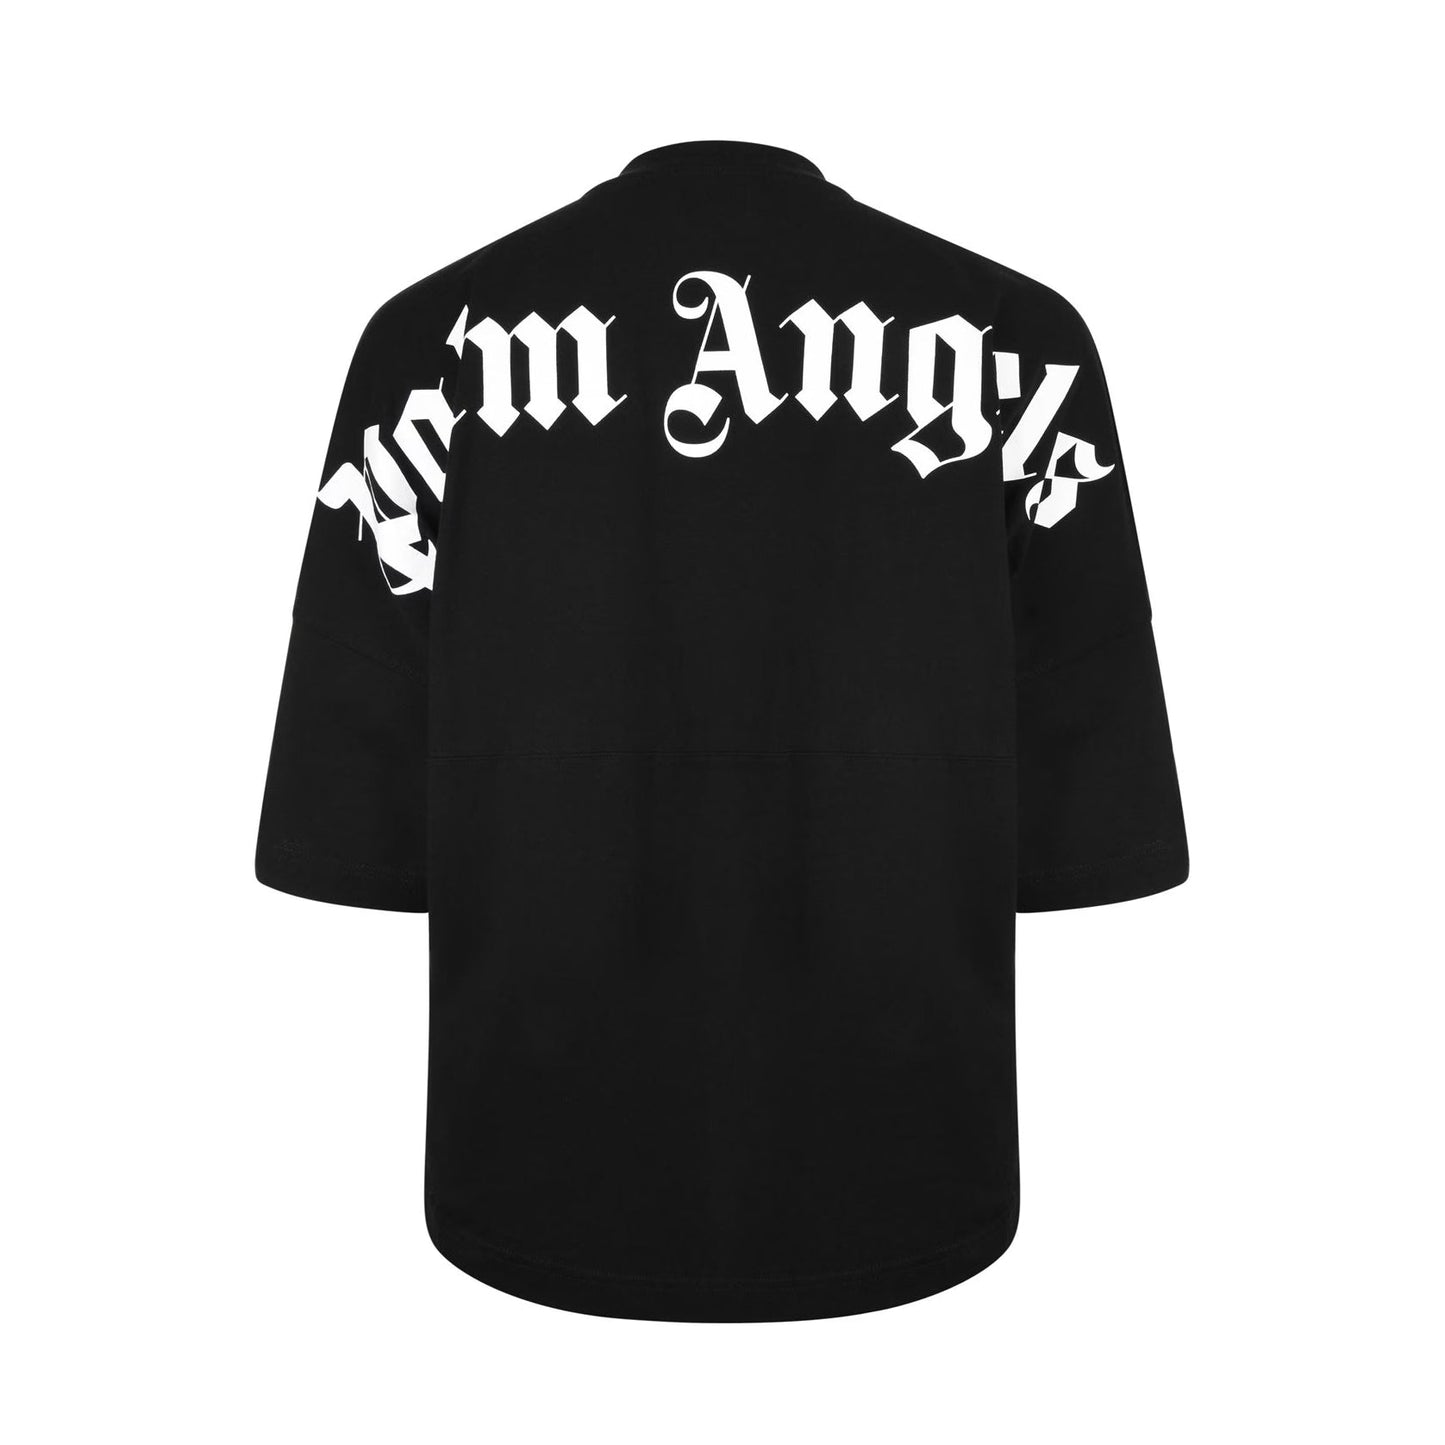 Palm Angels Classic Logo T-Shirts - Black White - Escape Menswear